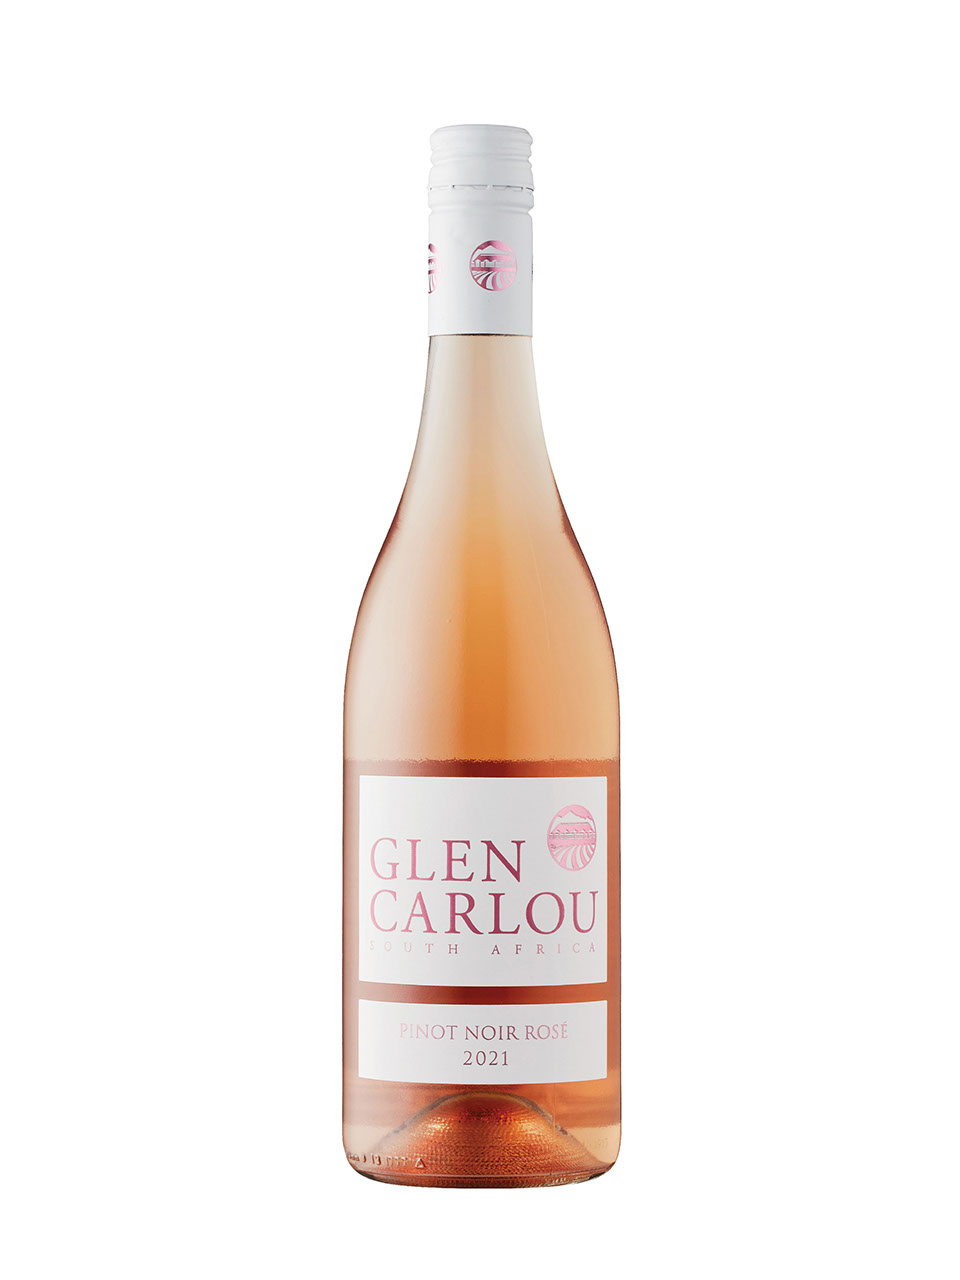 Glen Carlou Pinot Noir Rosé 2021 - View Image 1